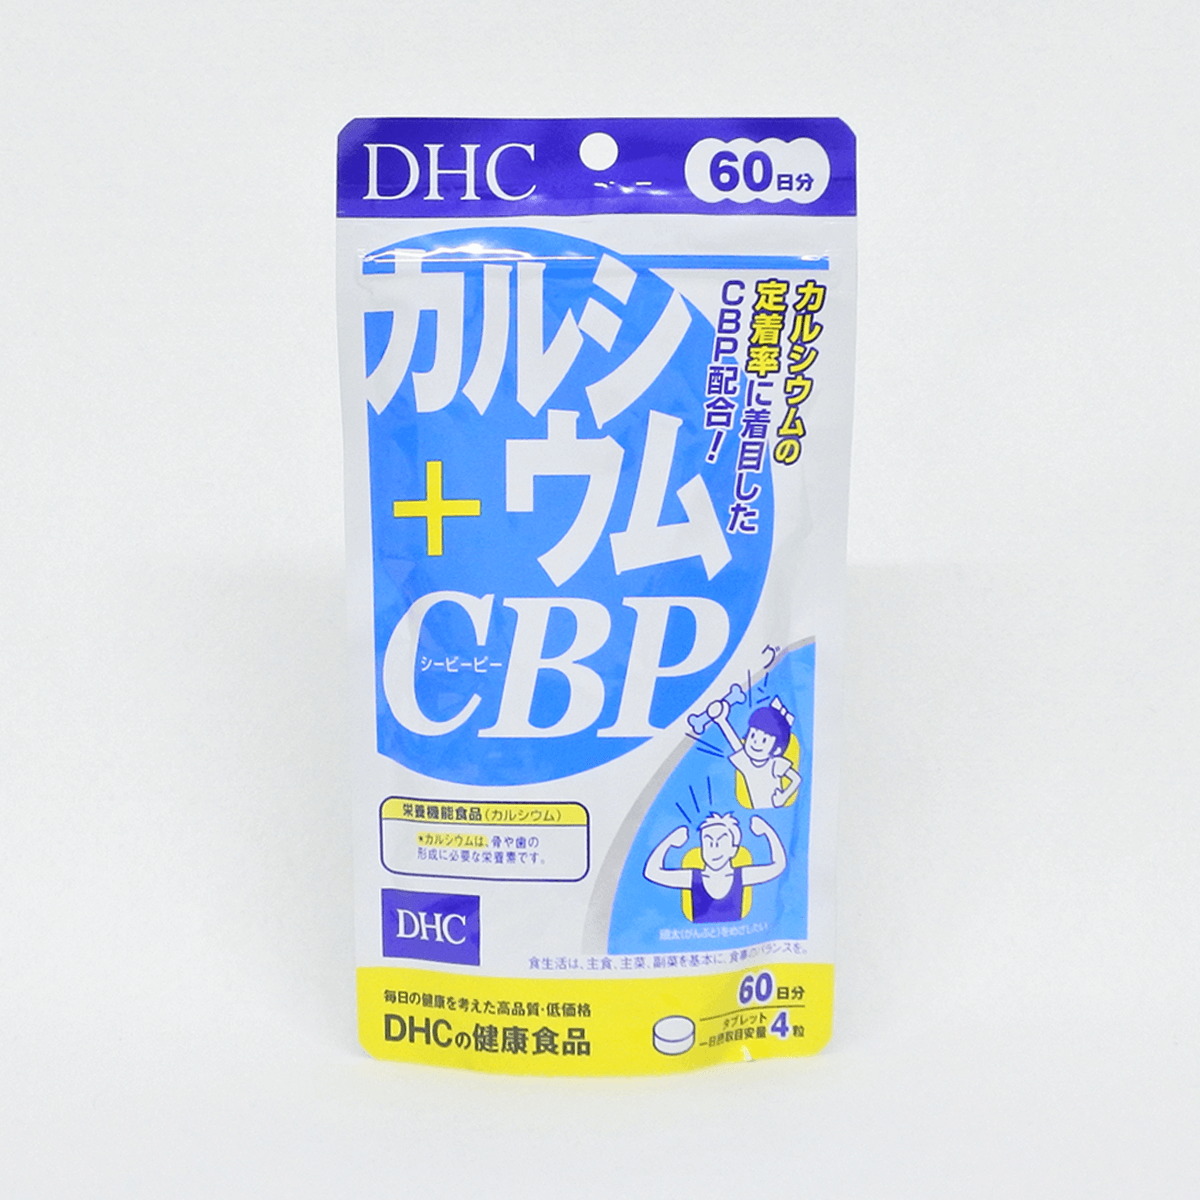 DHC 钙+乳清活性蛋白片 240粒 60日份